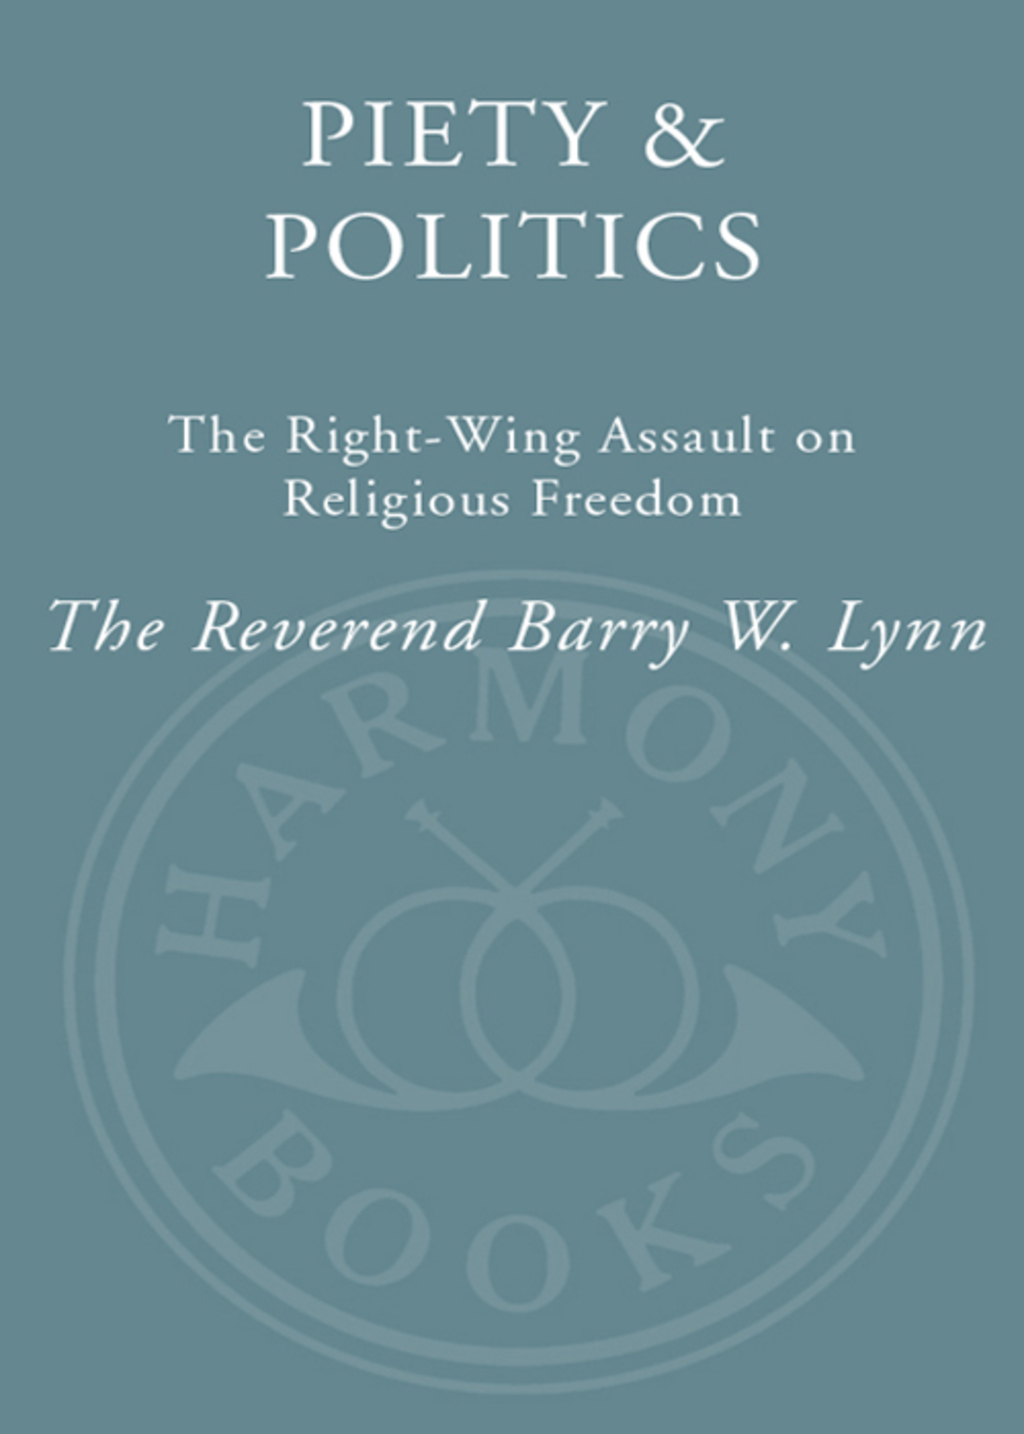 Piety & Politics (eBook) - Reverend Barry W. Lynn,